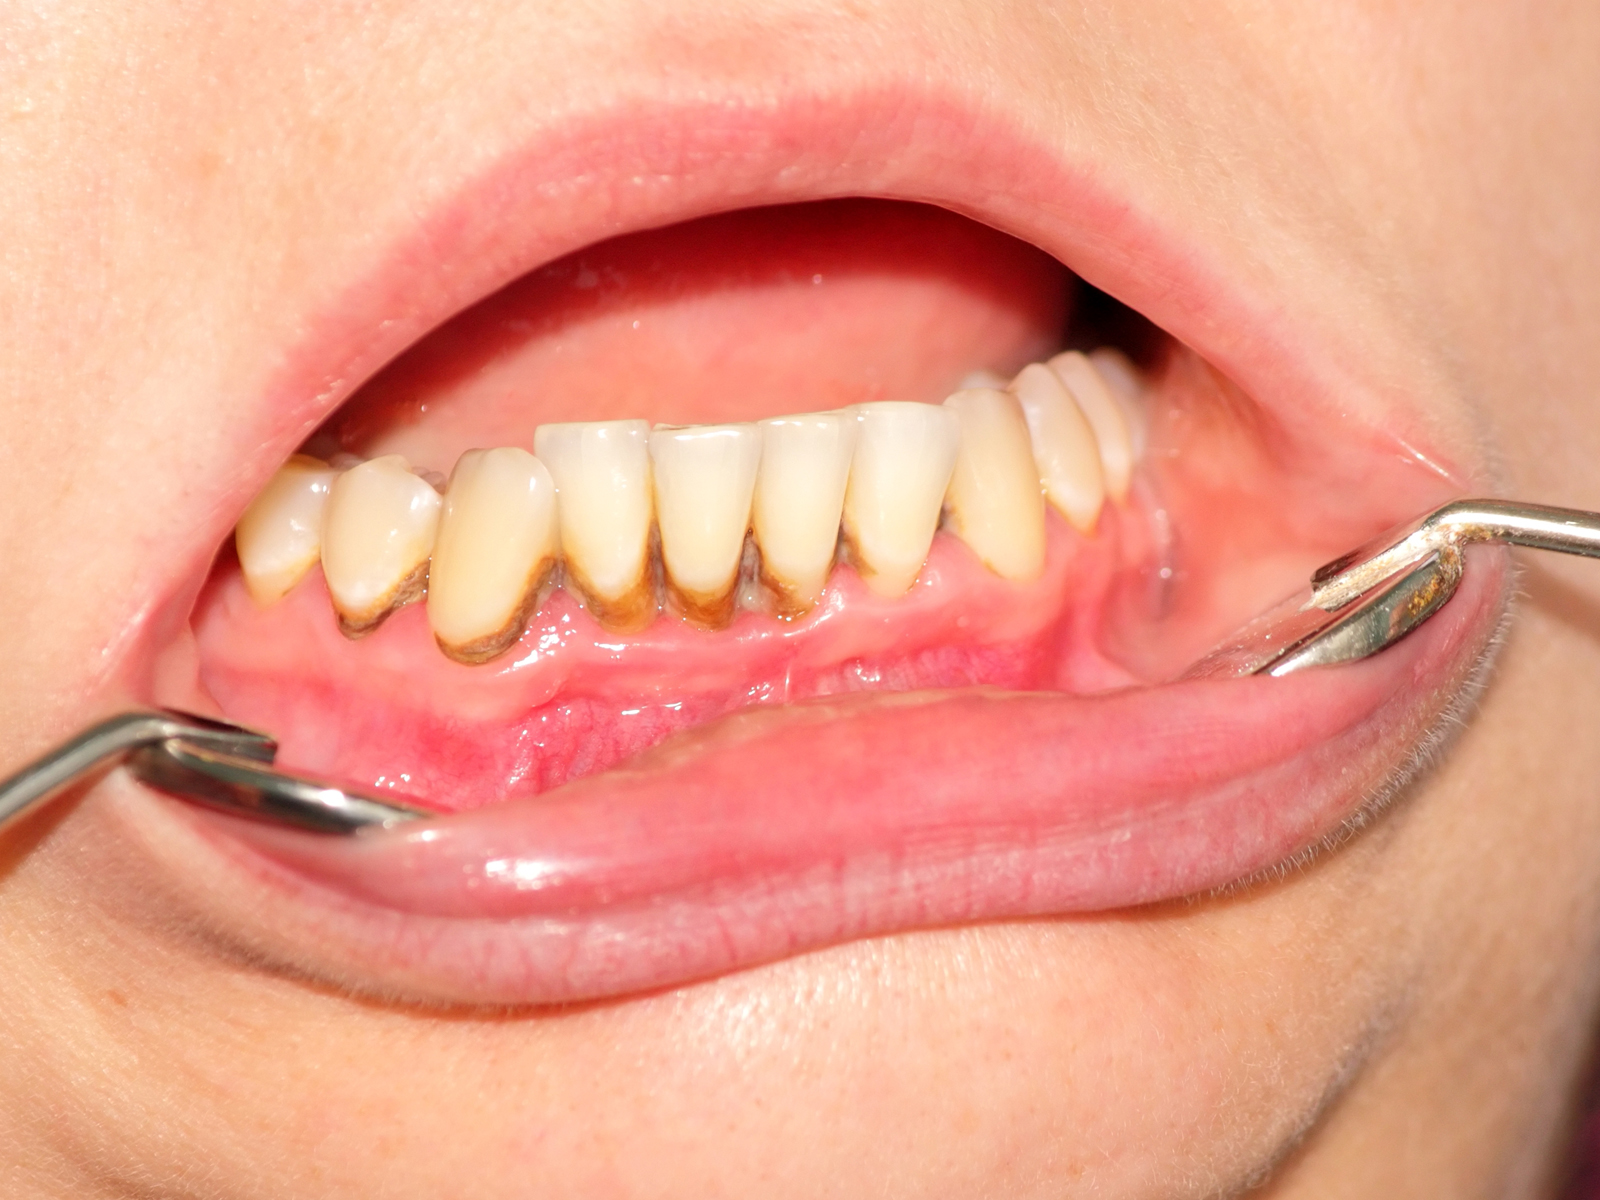 Does removing tartar loose teeth?